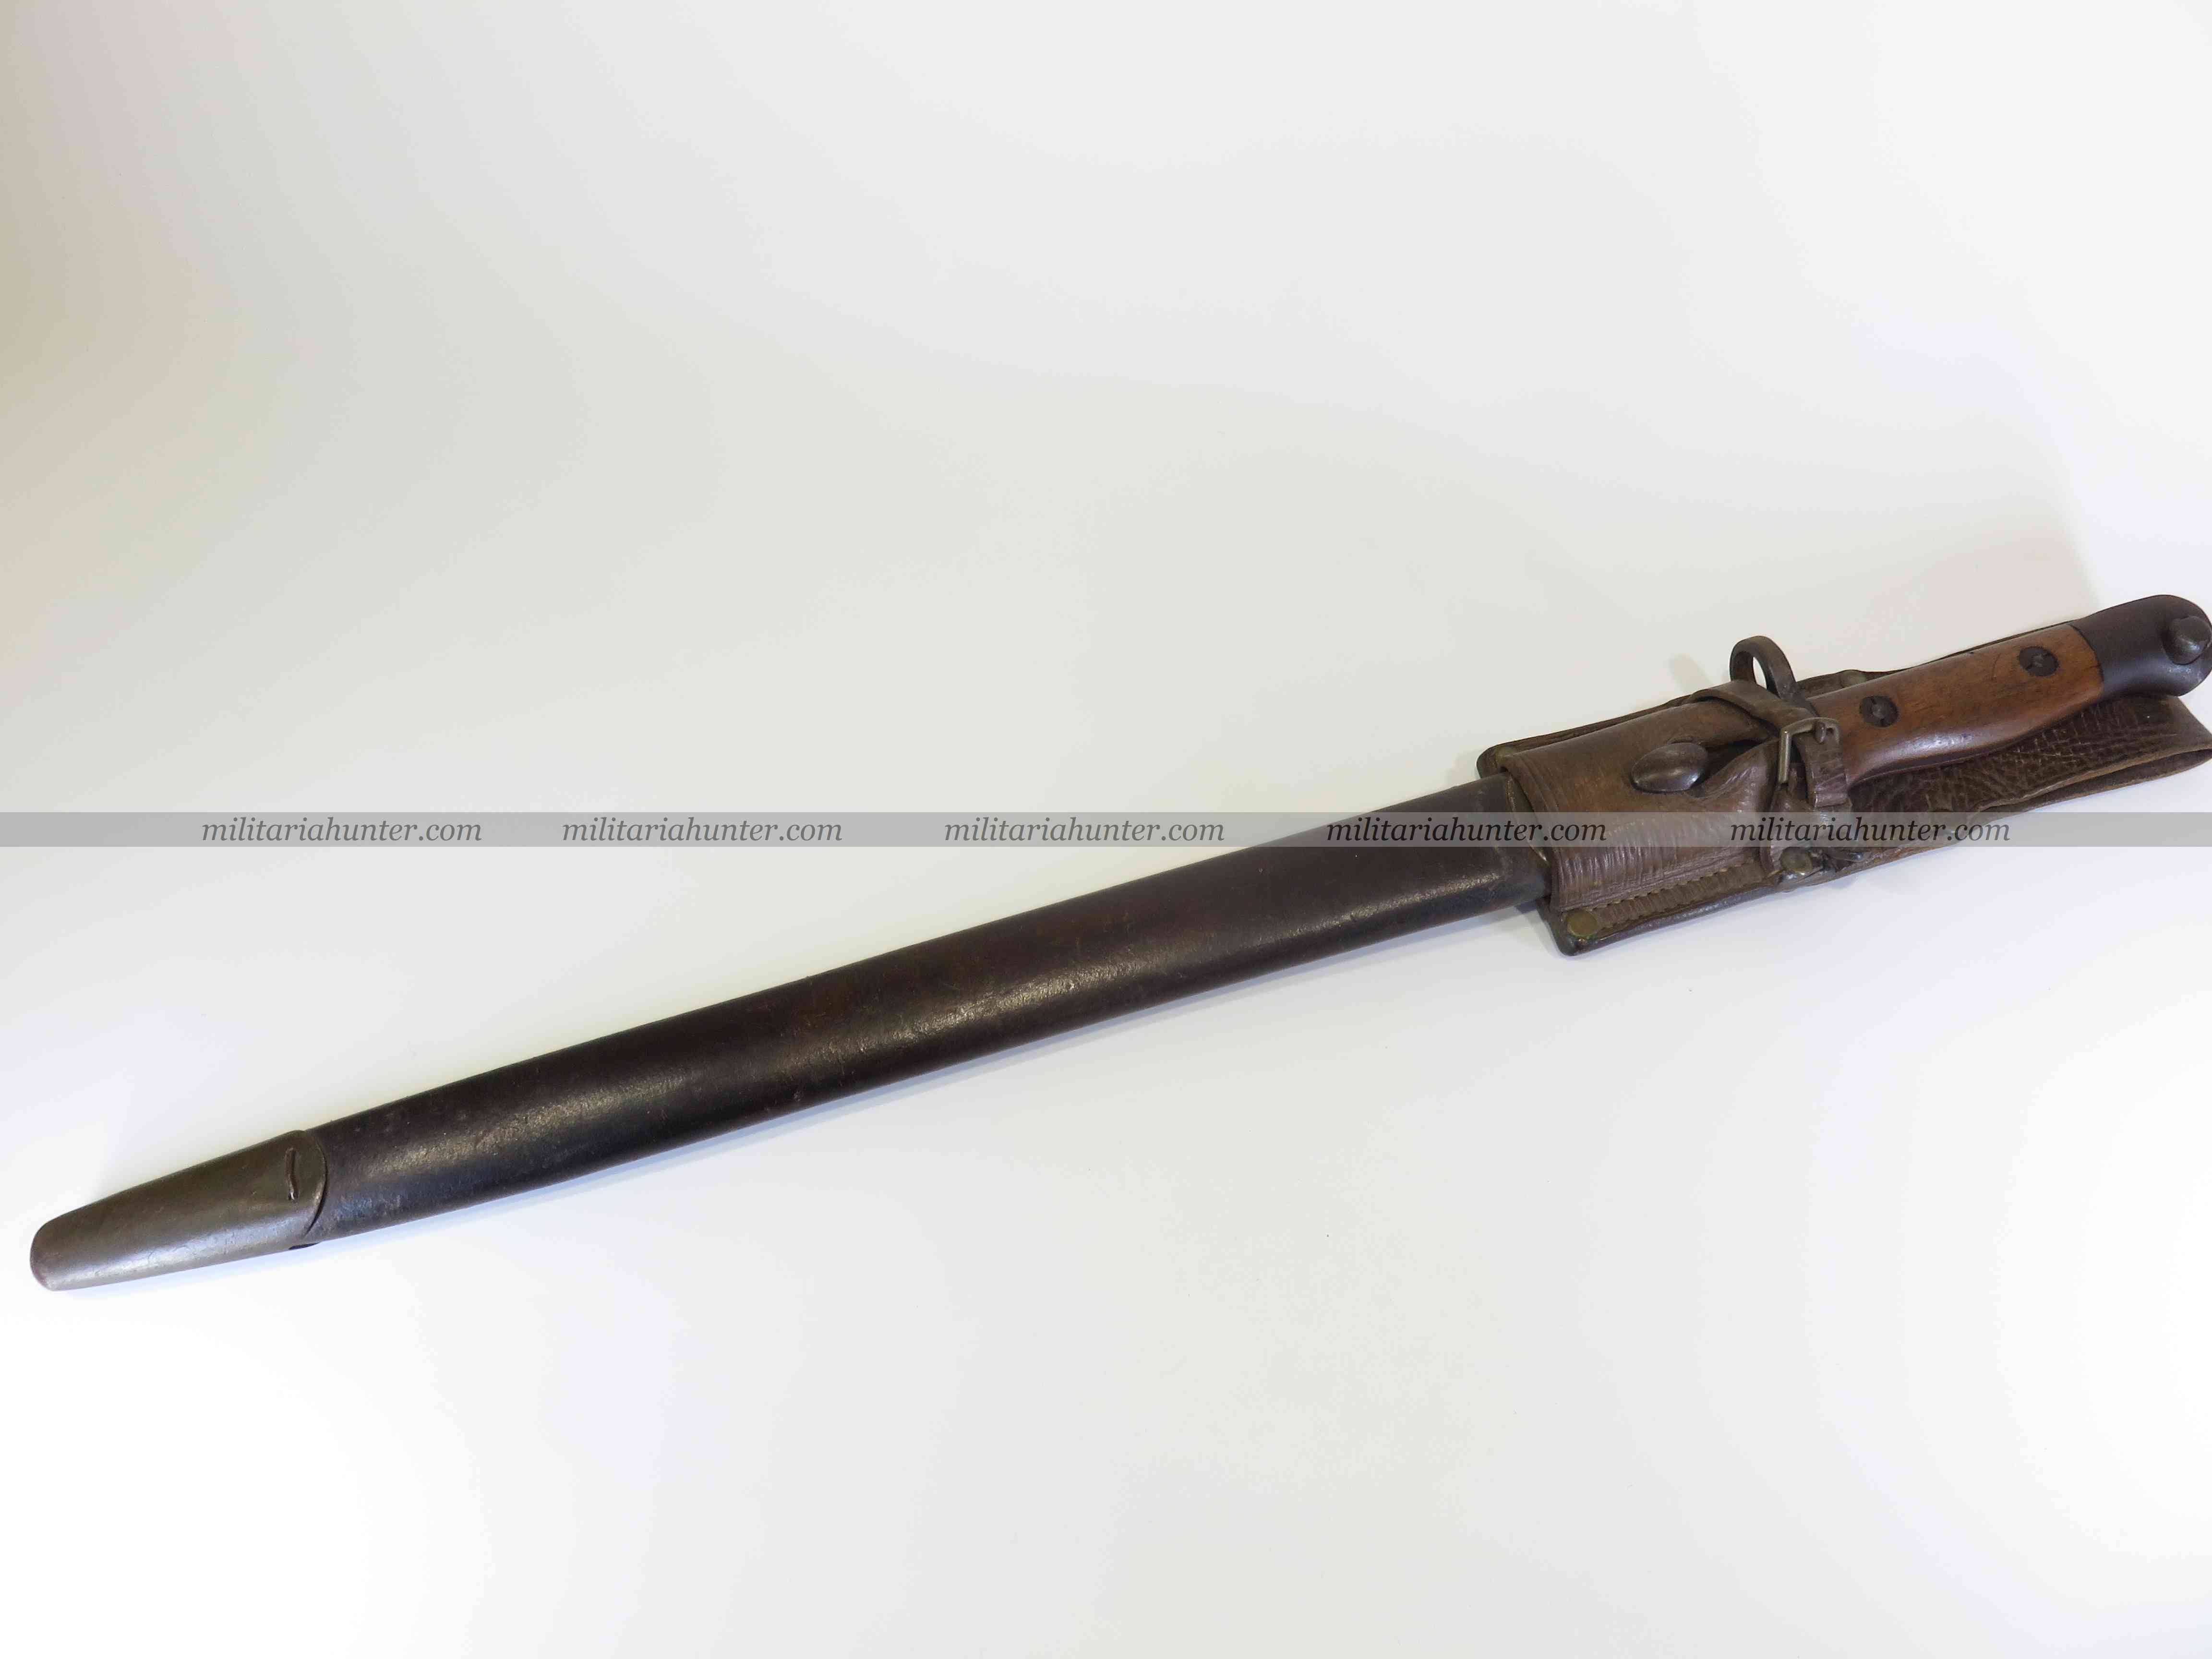 militaria : ww1 1907 bayonet with pattern 14 frog - baïo anglaise ww1 gousset cuir